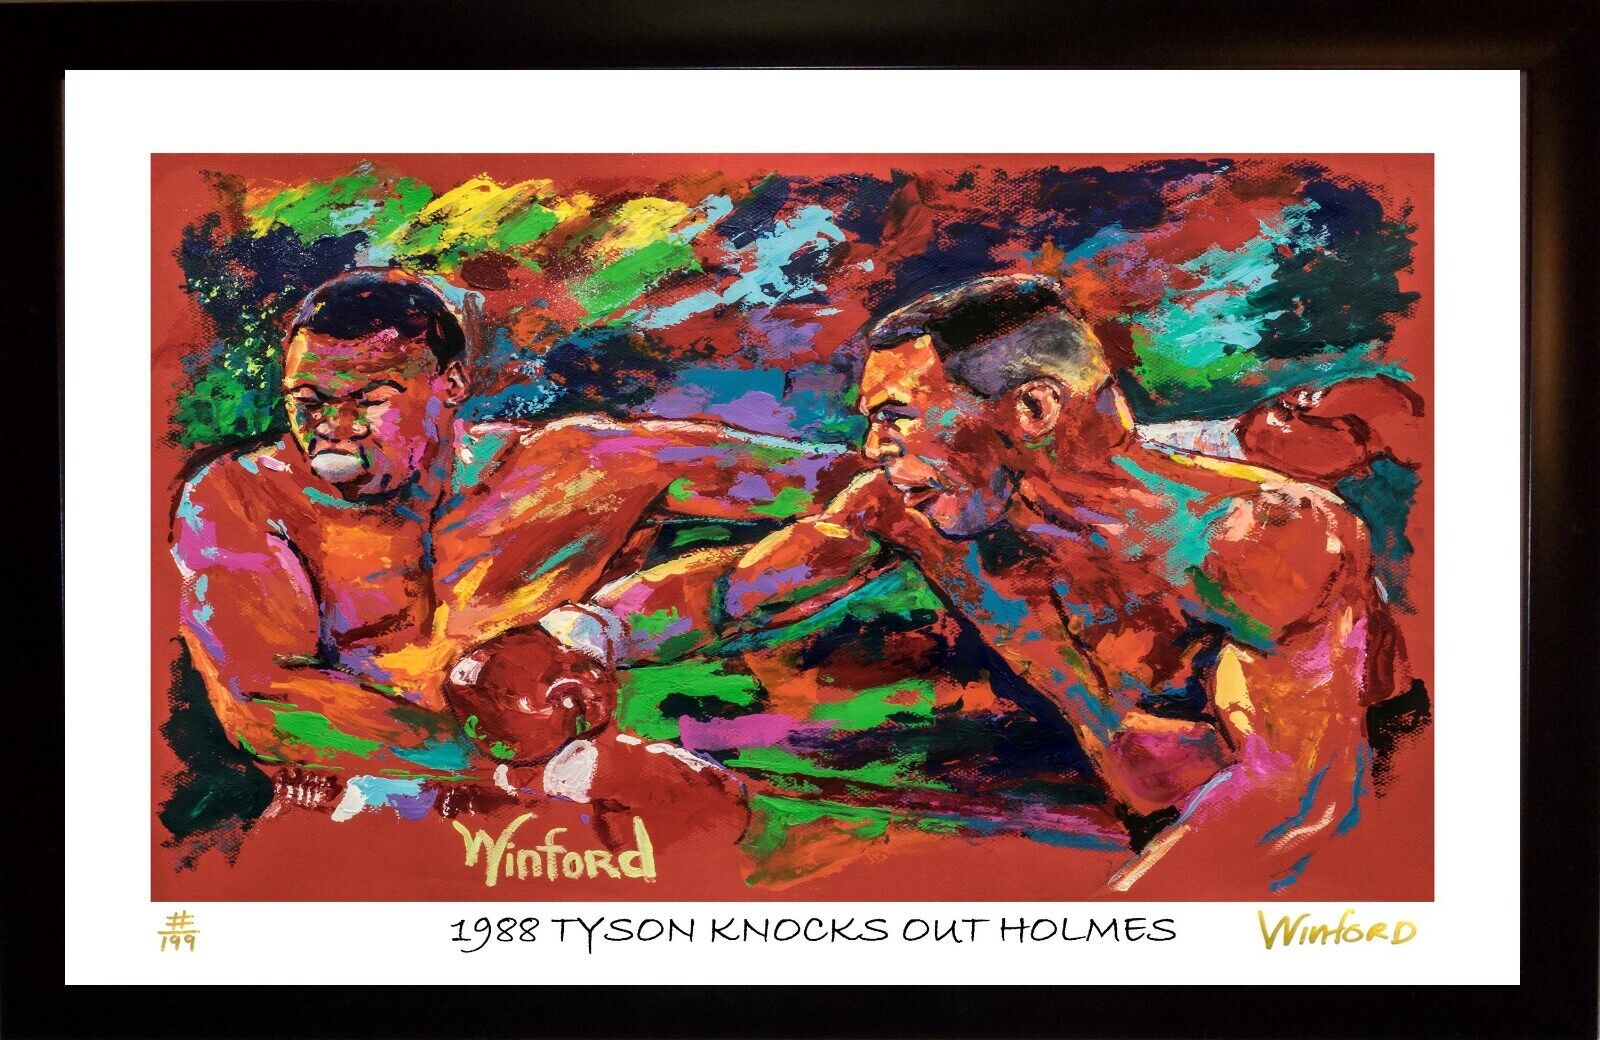 Sale Mike Tyson Larry Holmes L.E. Art Print Winford Was 149.95 Now 99.95